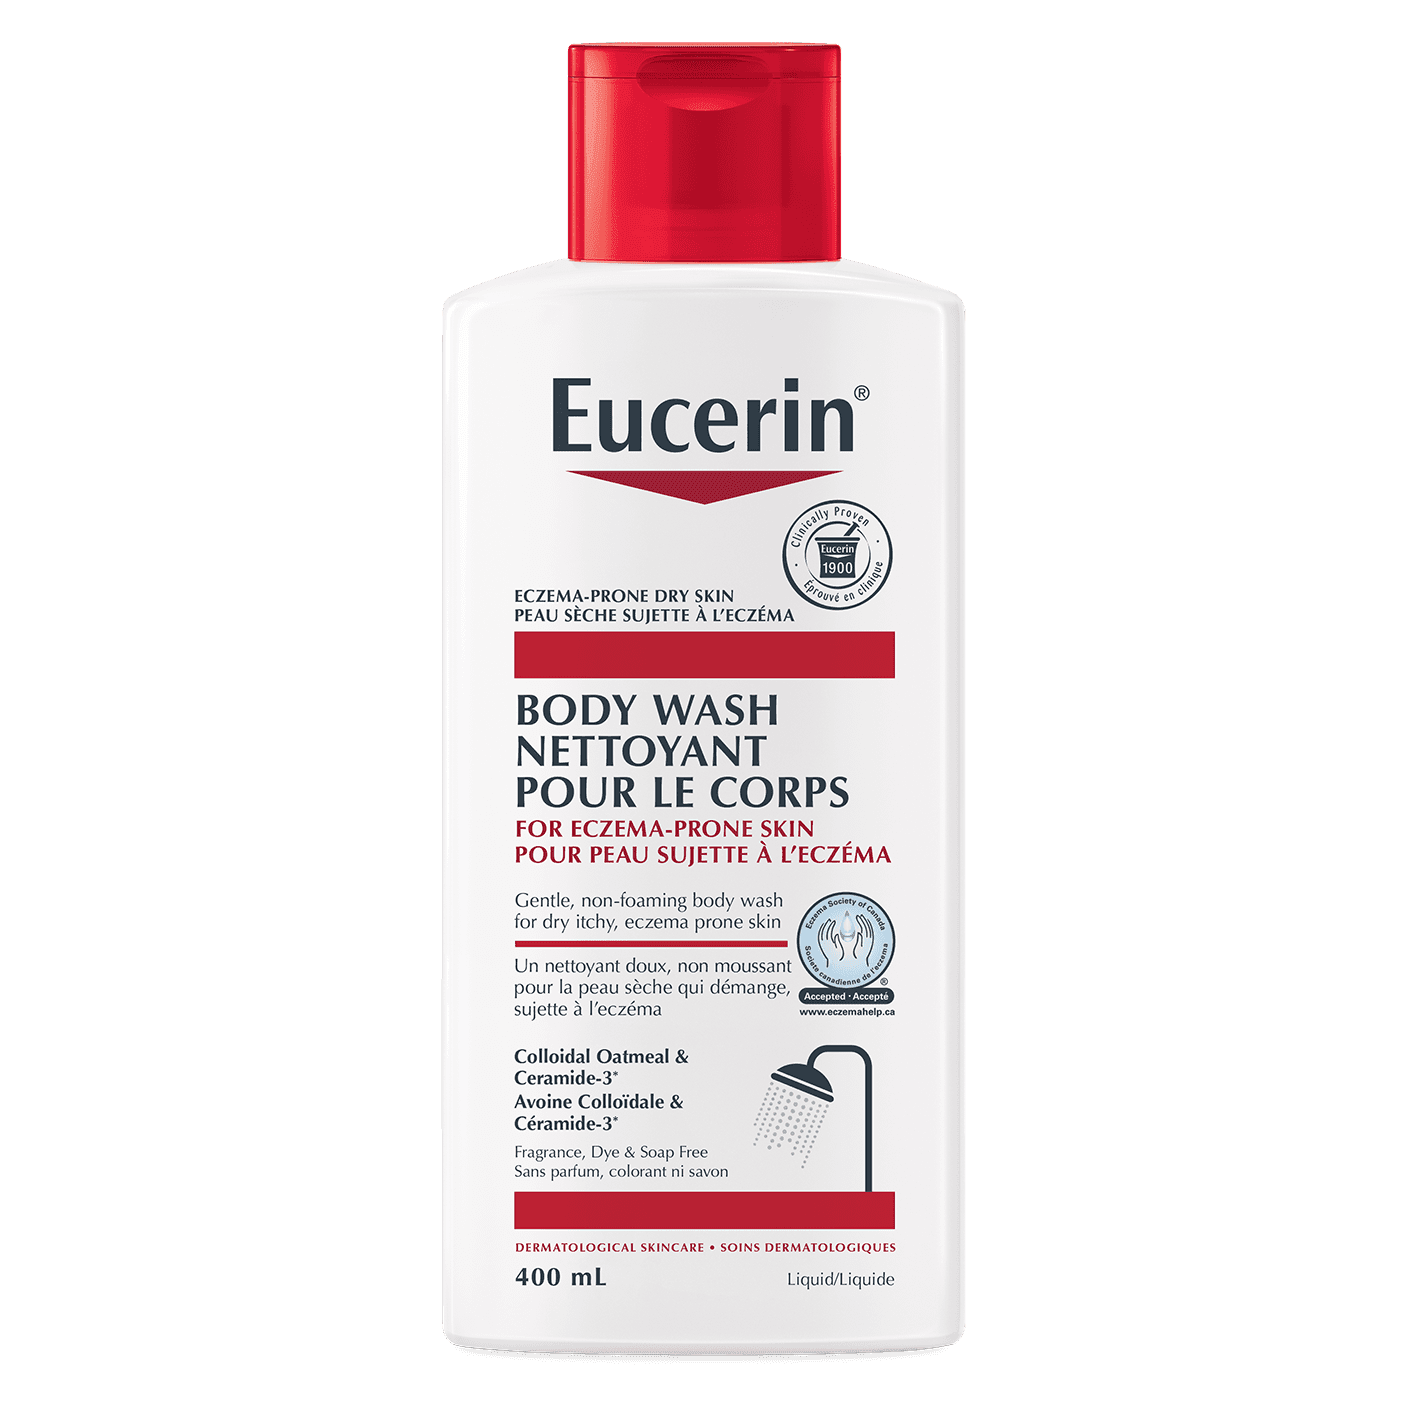 Image of Eucerin Body Wash for Eczema Prone Skin packshot.